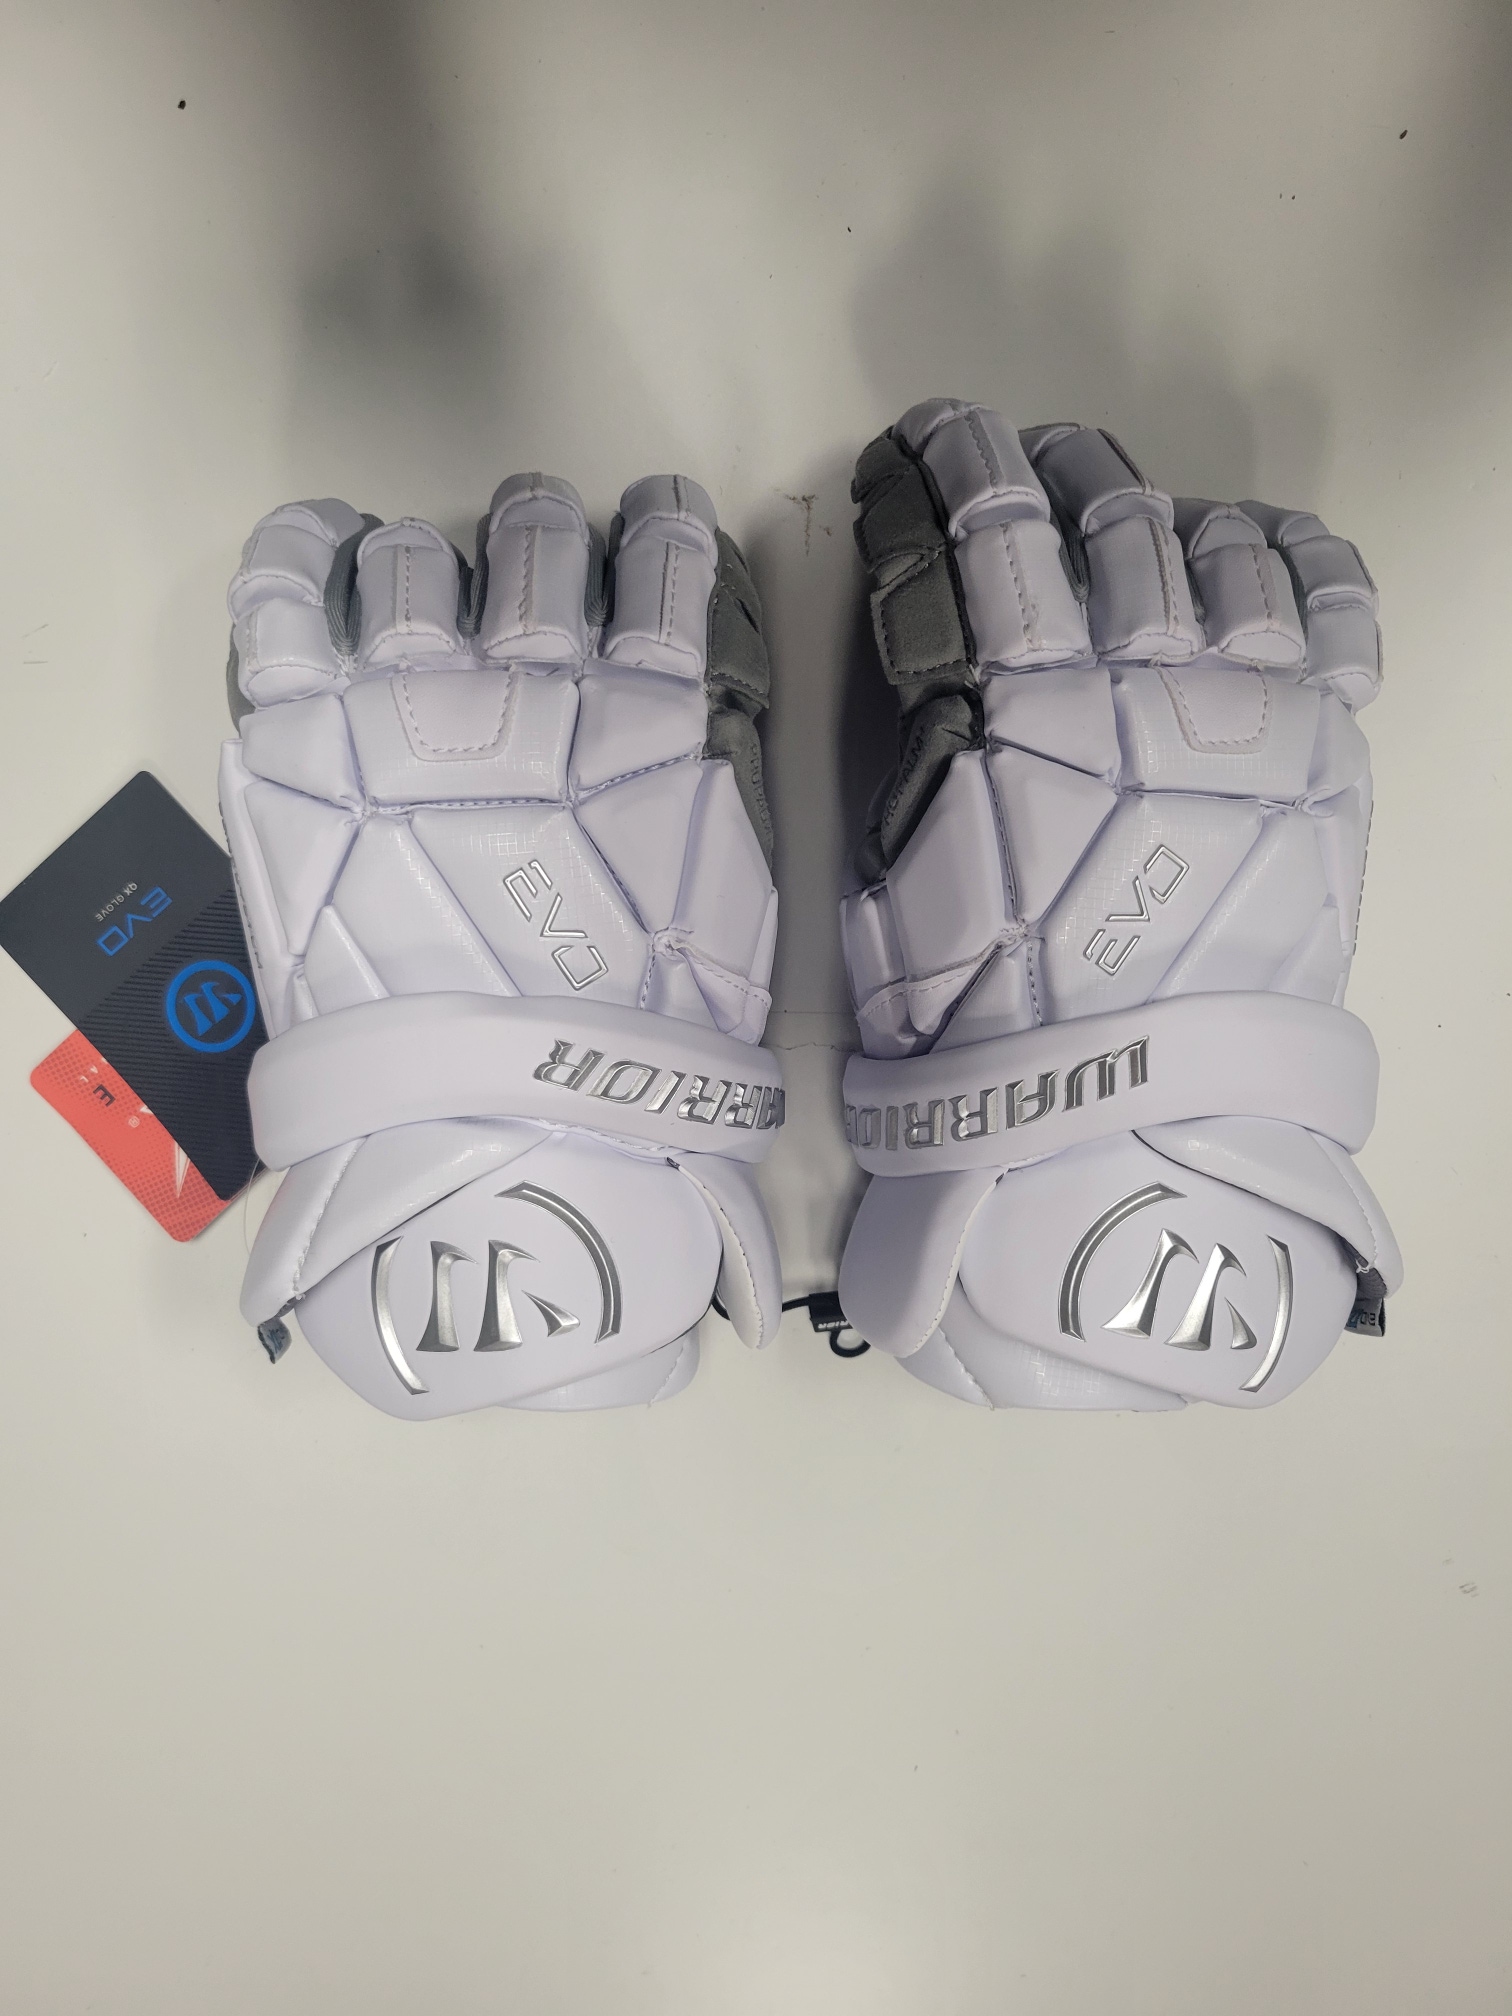 New Warrior Adult Large EVO QX2 Lacrosse Gloves - white